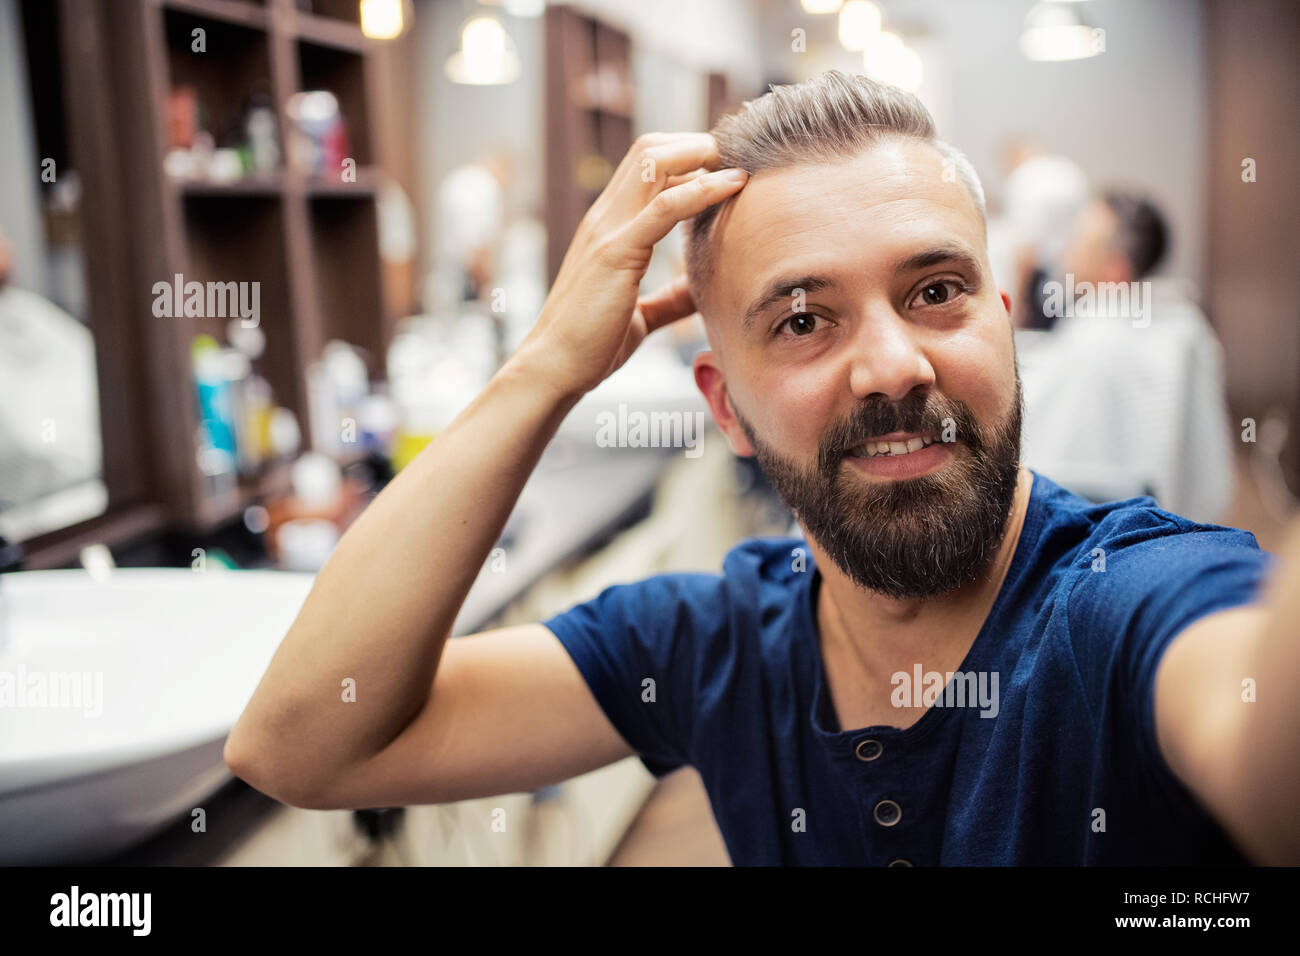 Hipster man client in barber shop, taking seflie. Stock Photo